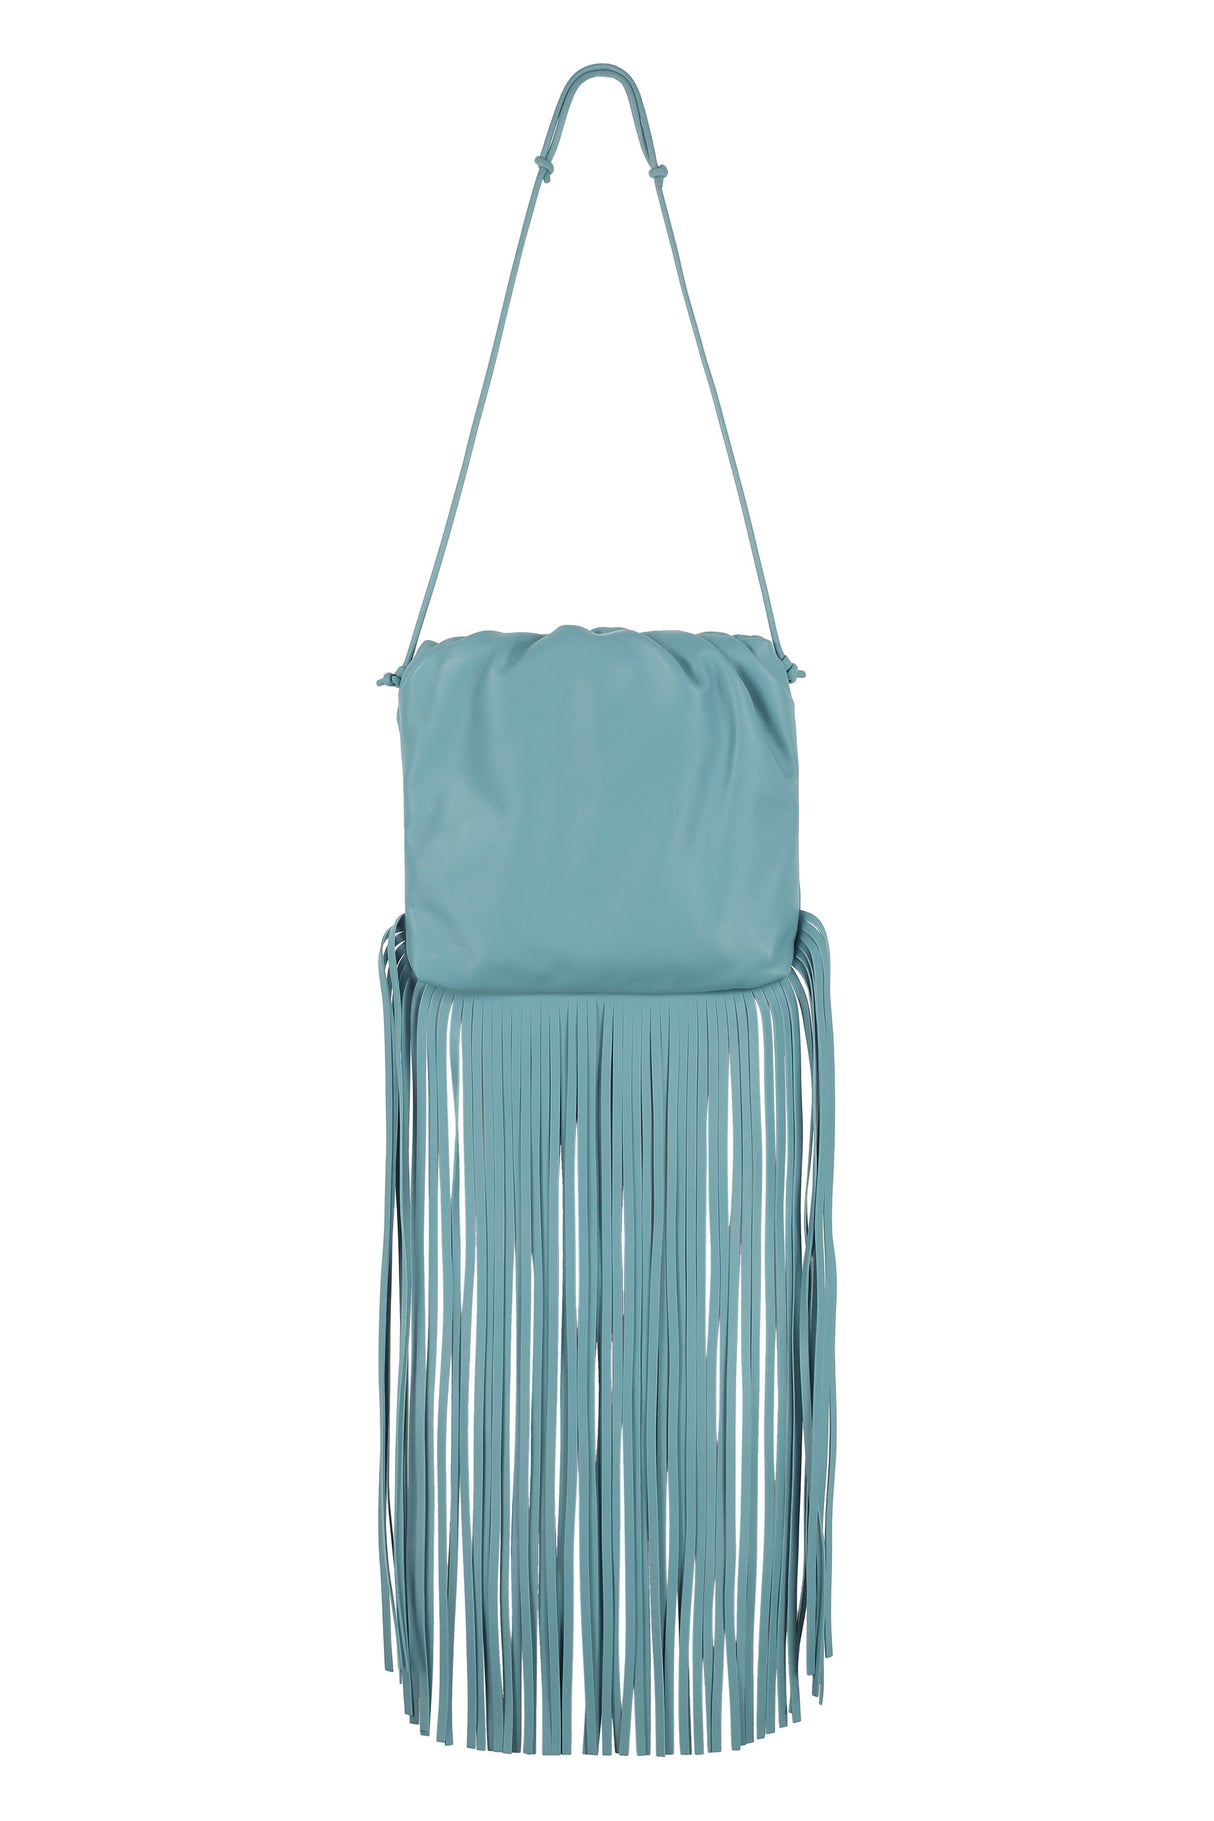 BOTTEGA VENETA Blue Finge Pouch Handbag - FW20 Collection